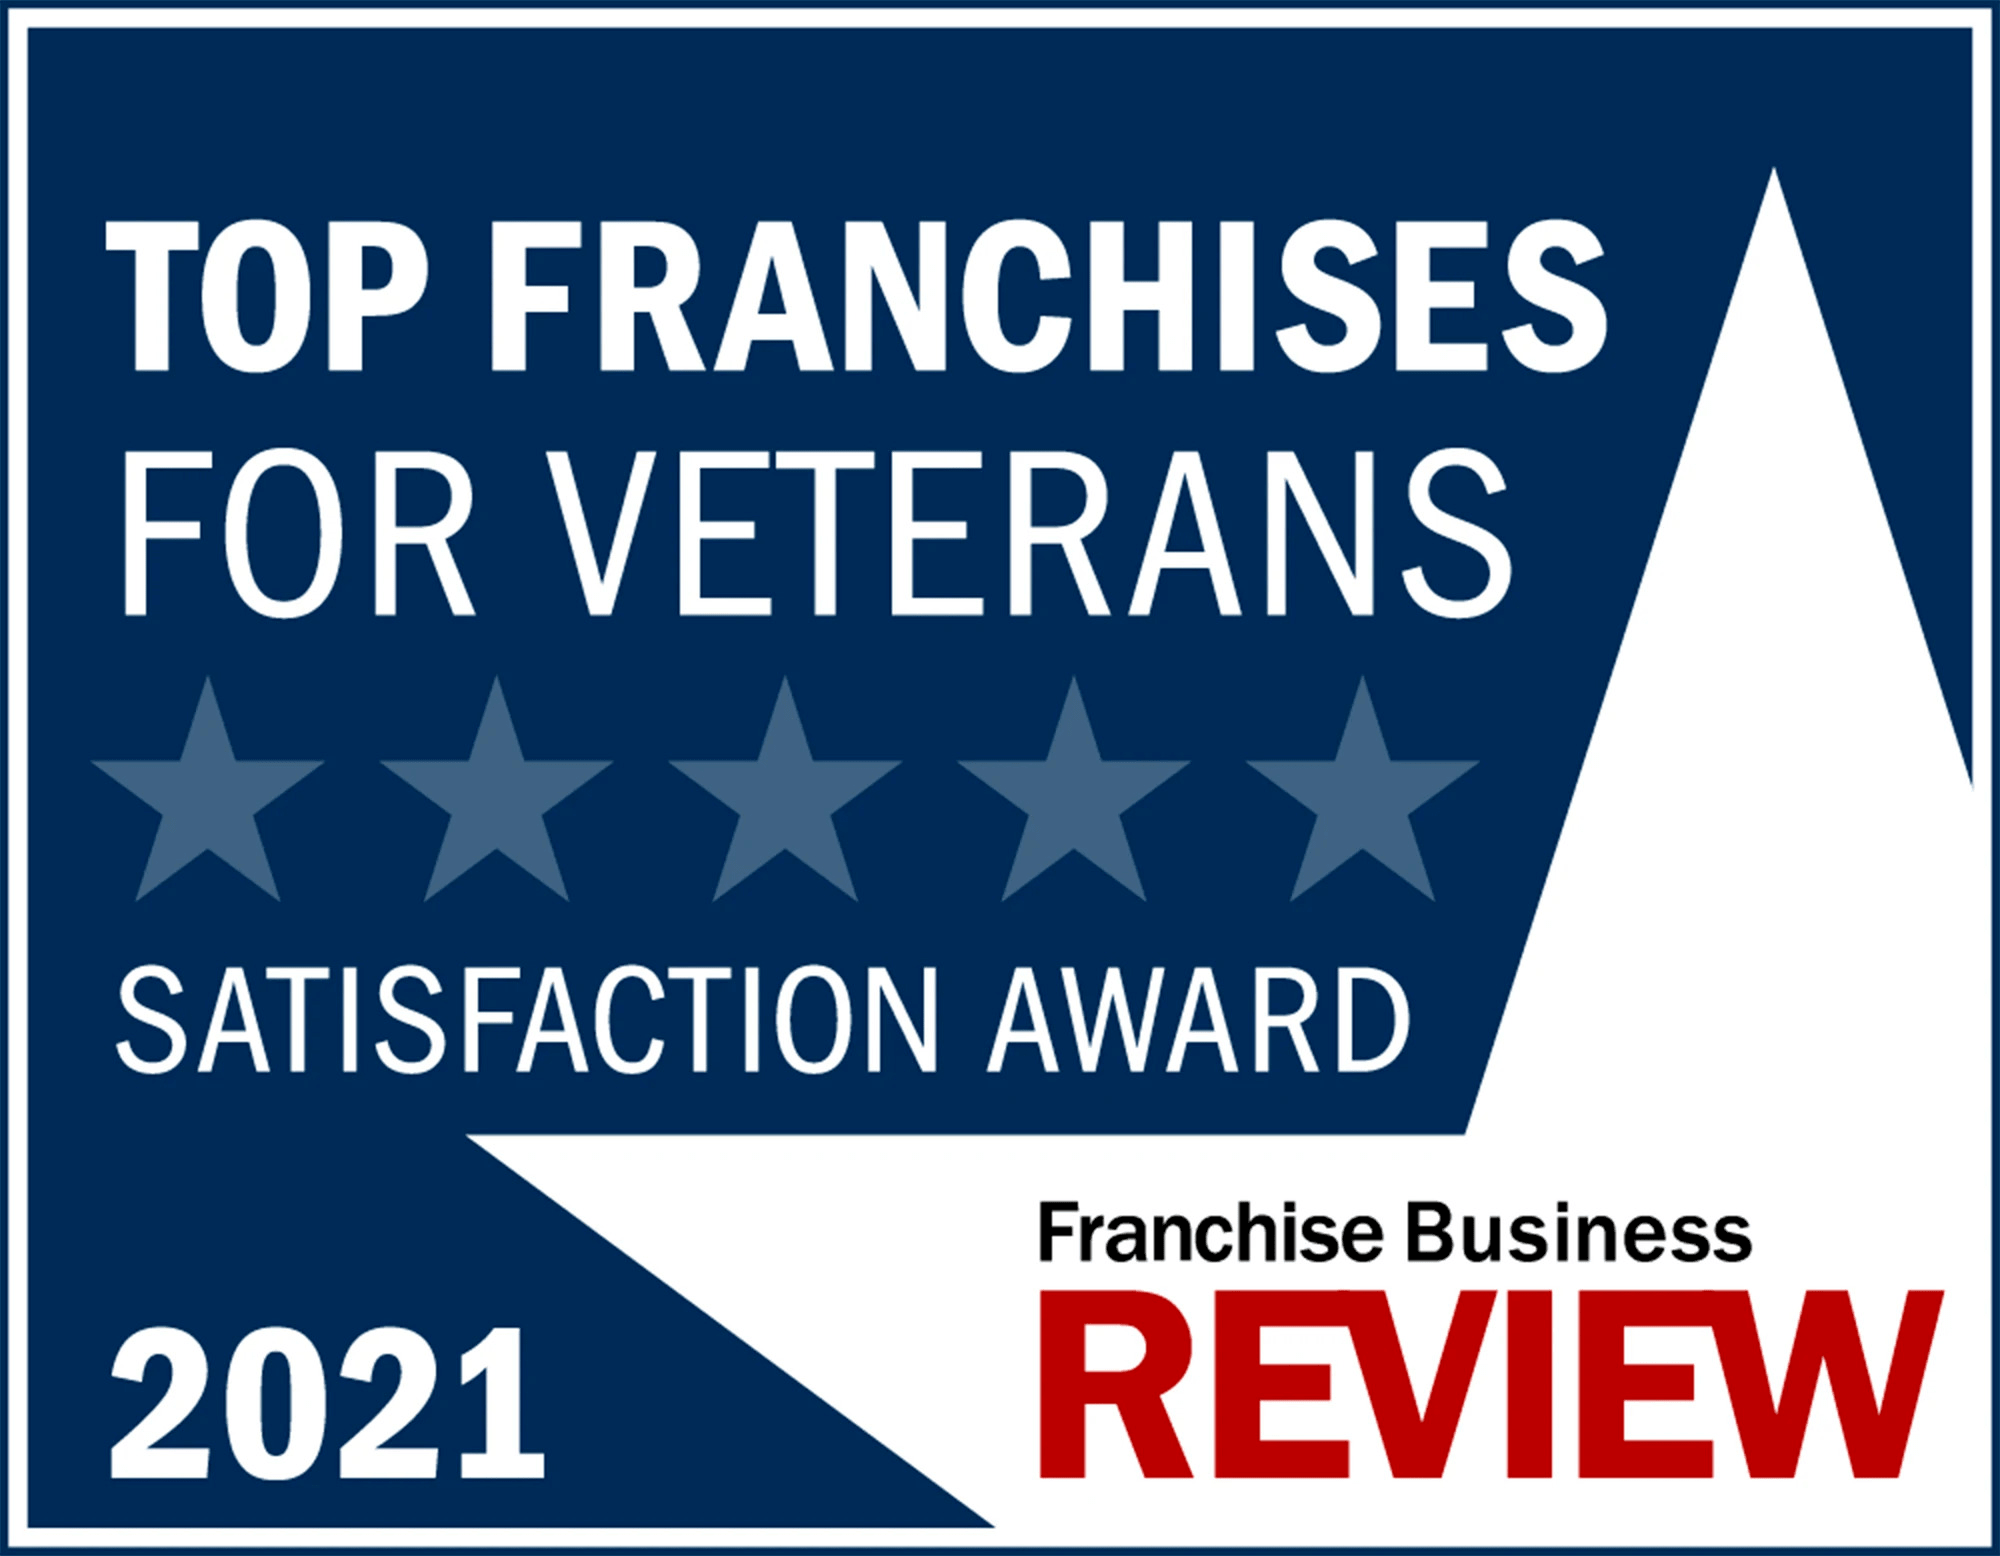 Top Franchises for Veterans Satisfaction Award 2020